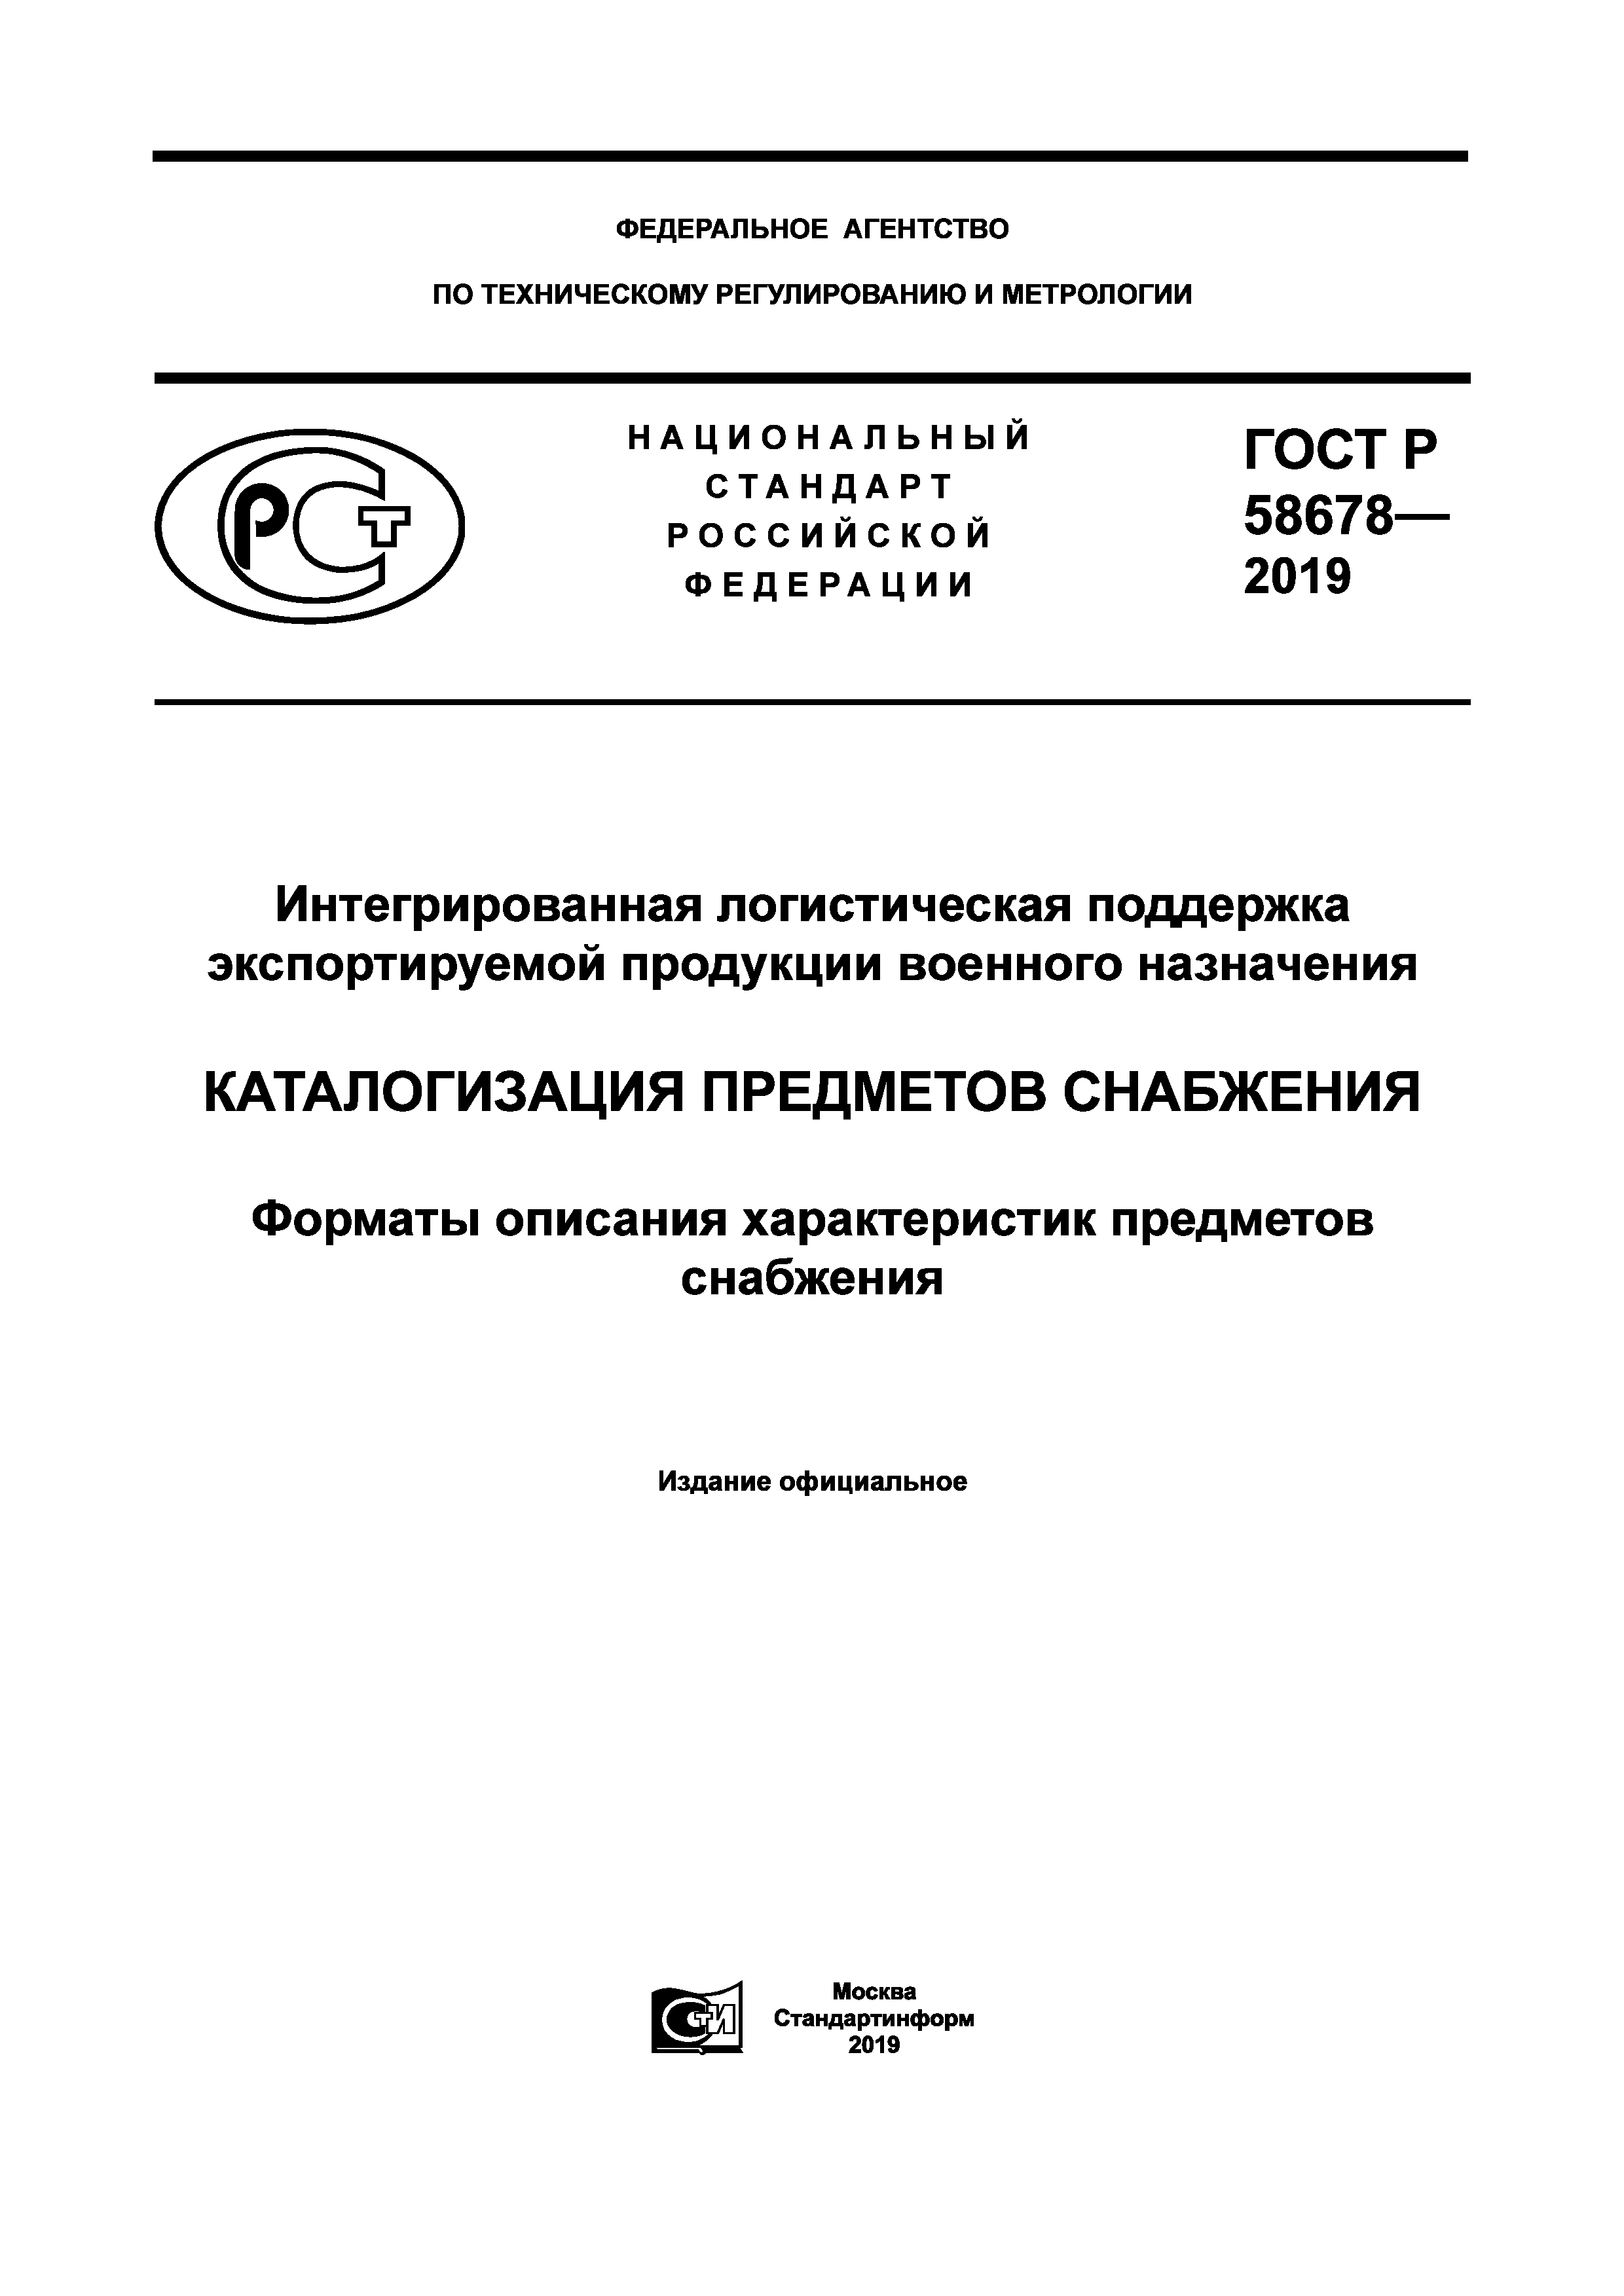 ГОСТ Р 58678-2019